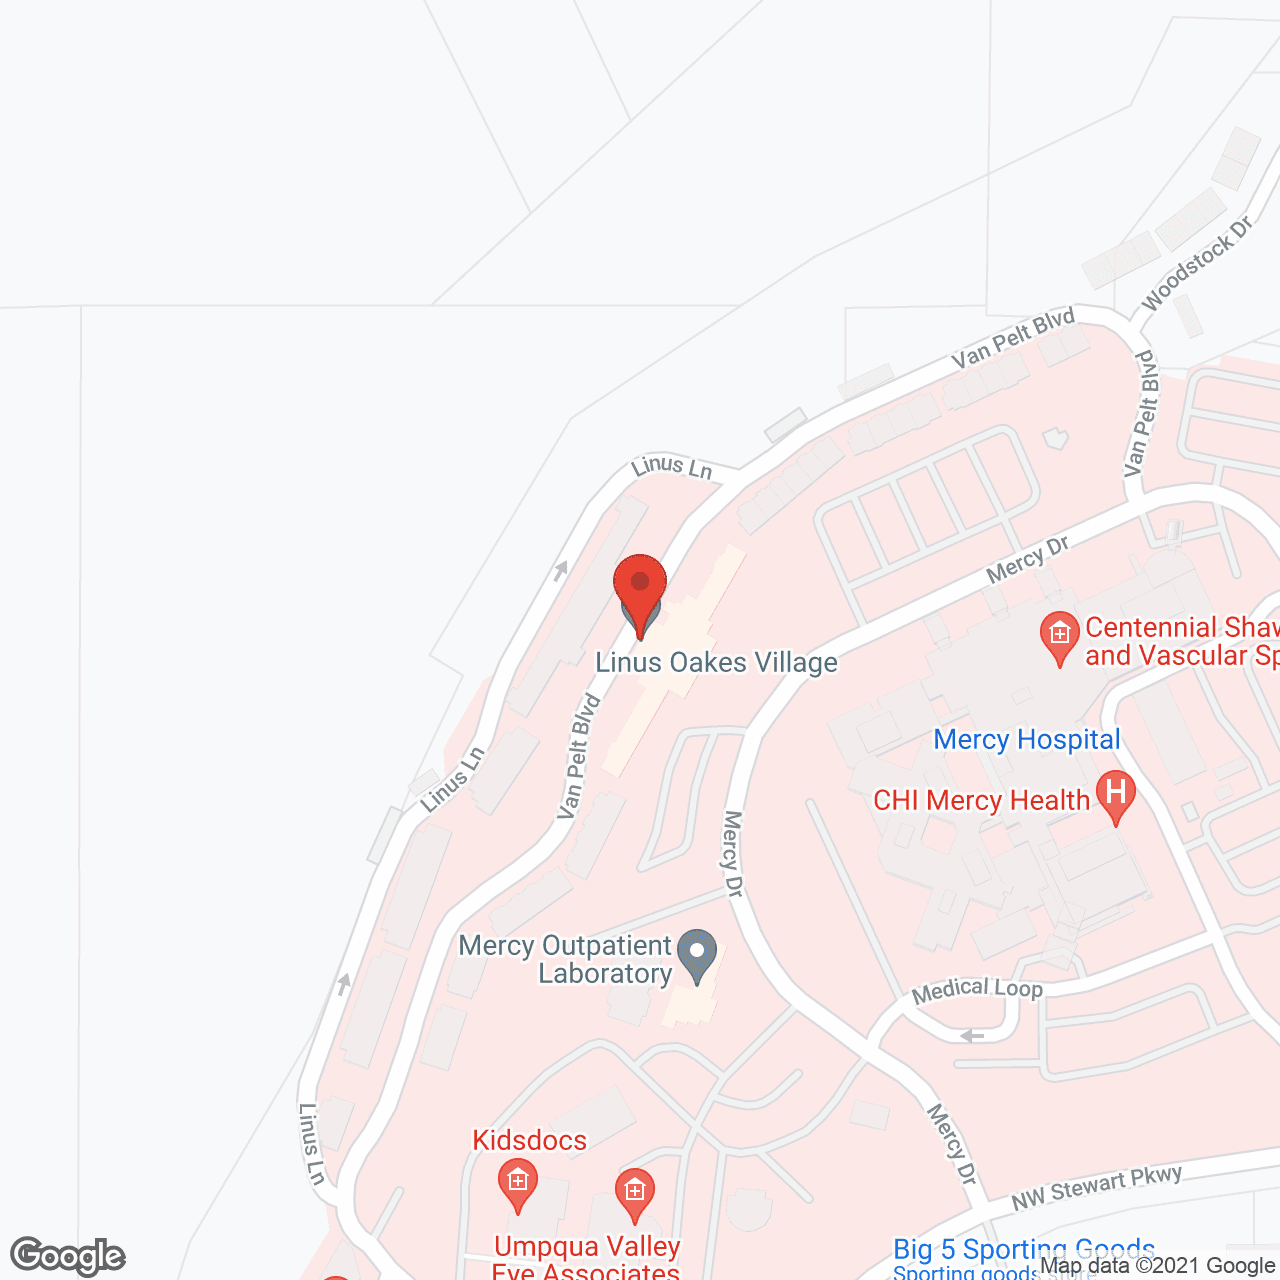 Linus Oakes Village in google map